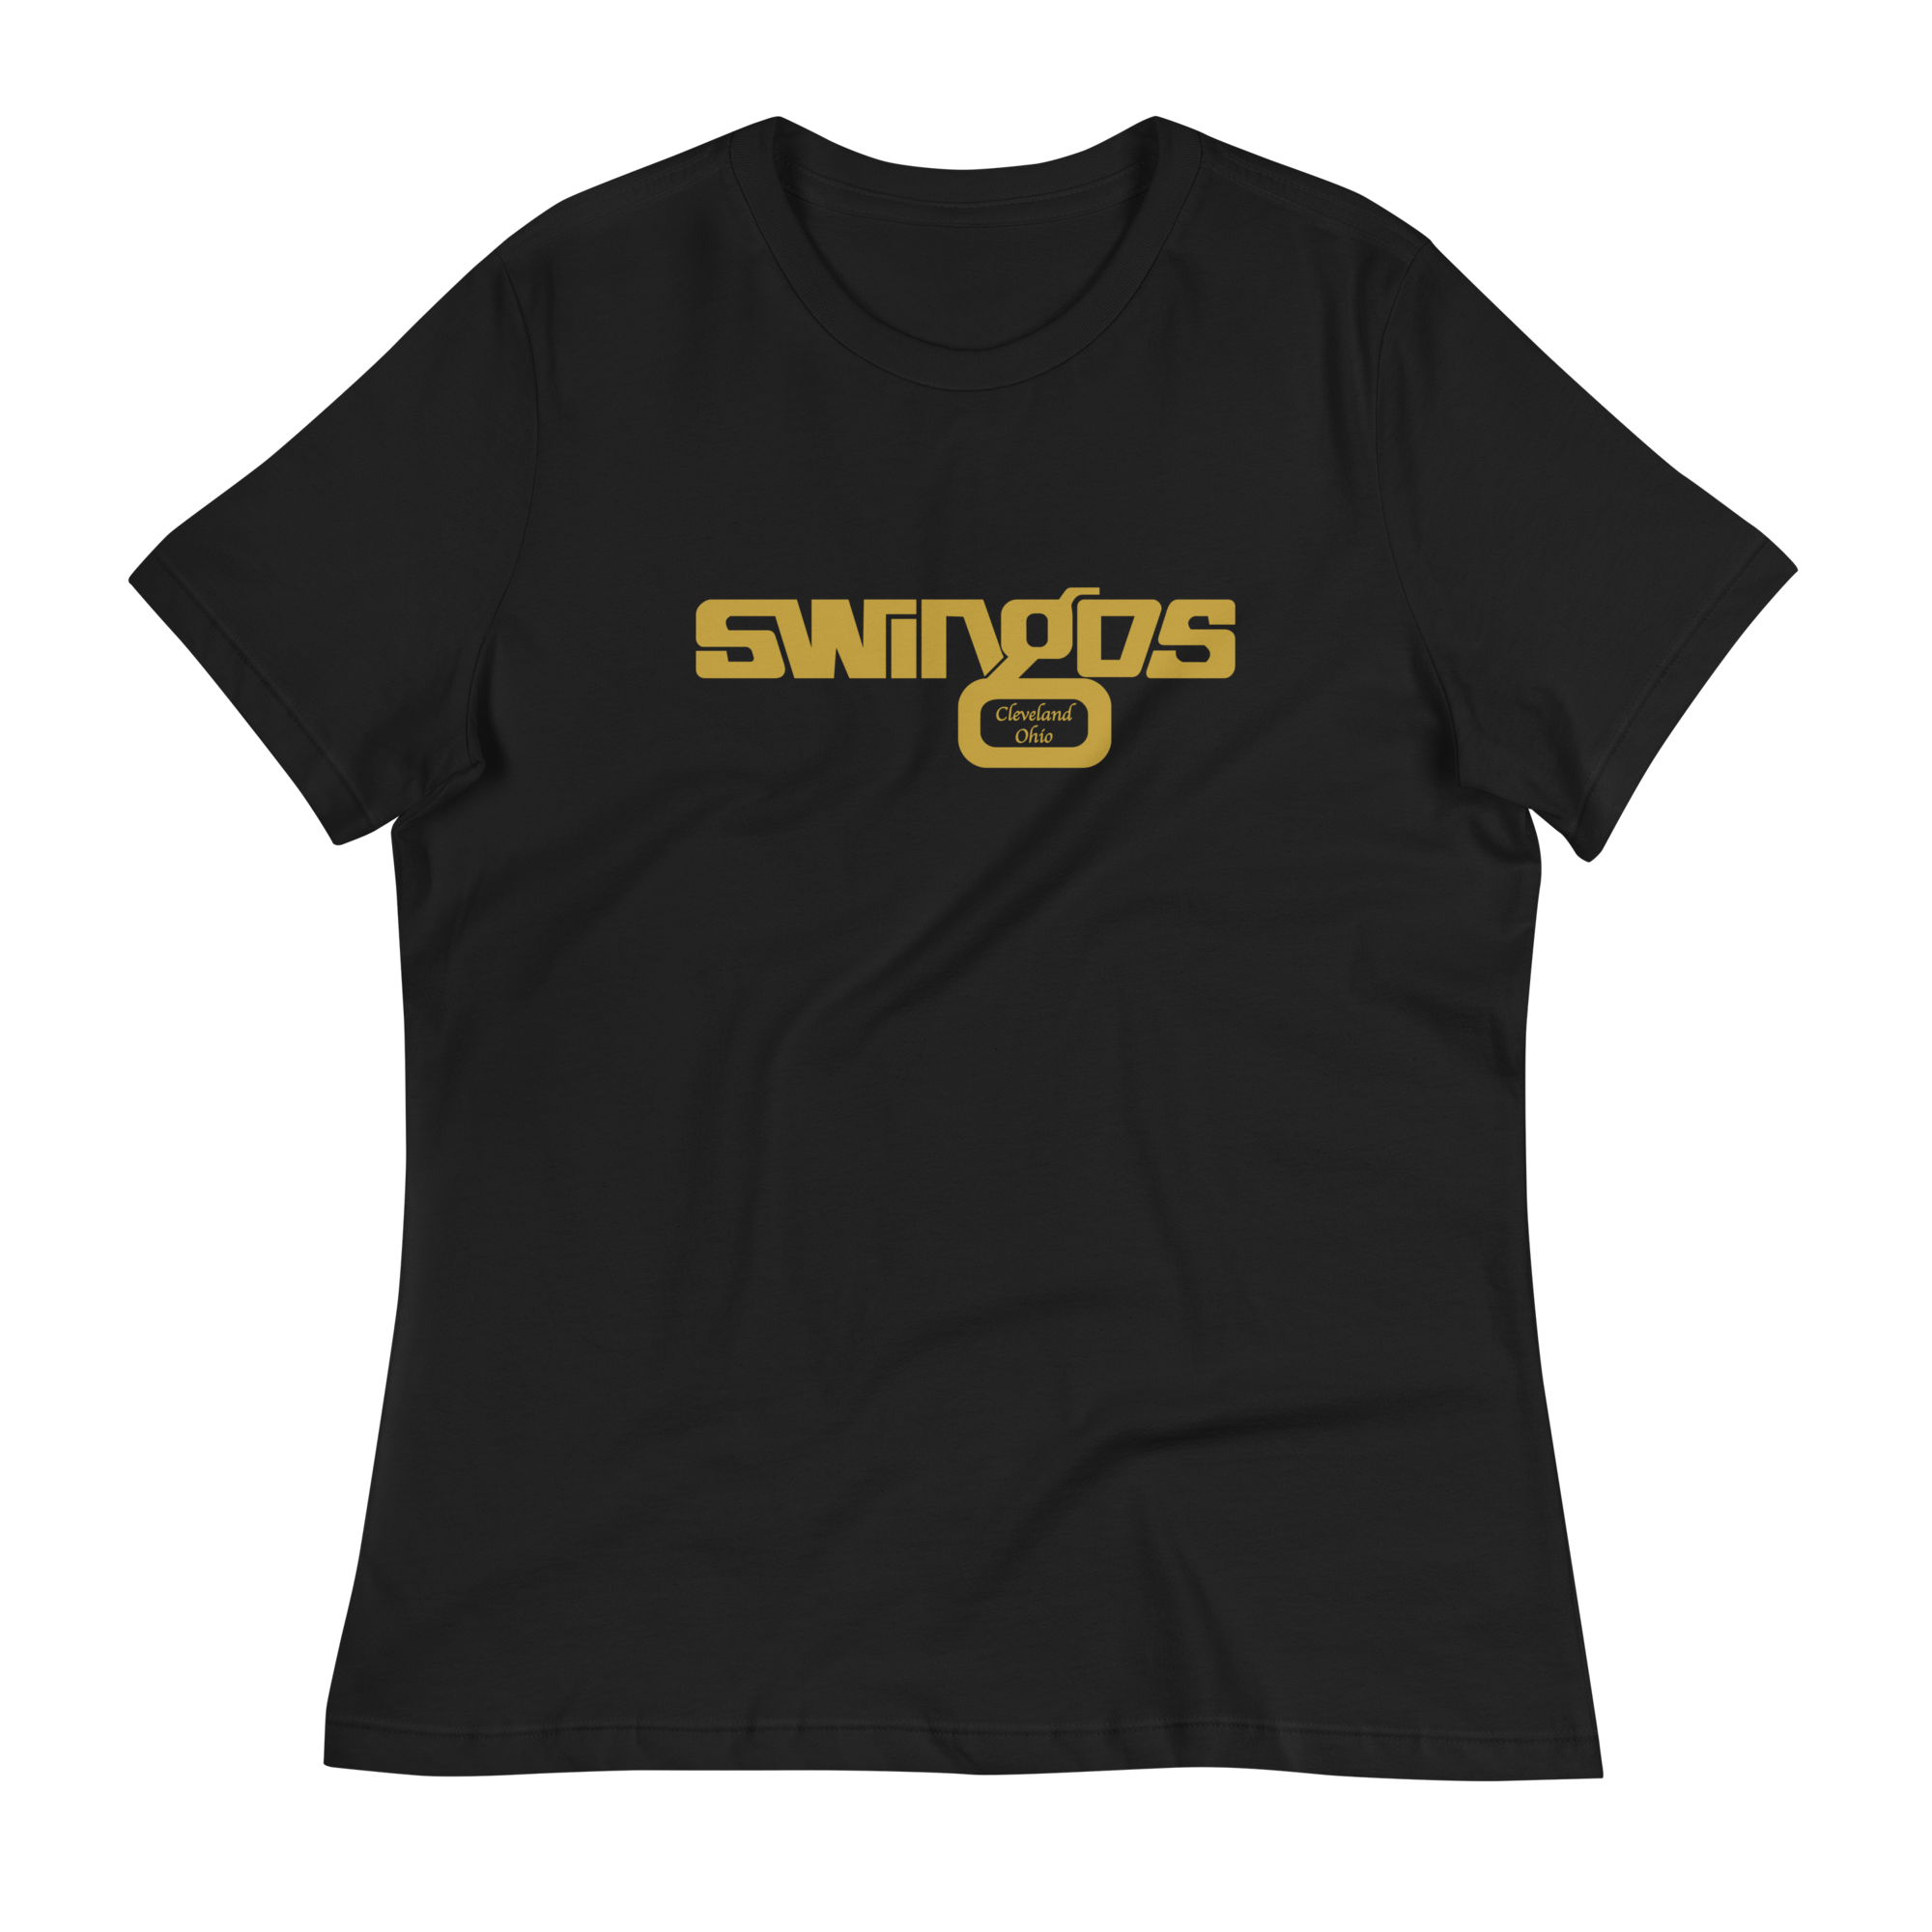 Swingos Women's Black T-Shirt